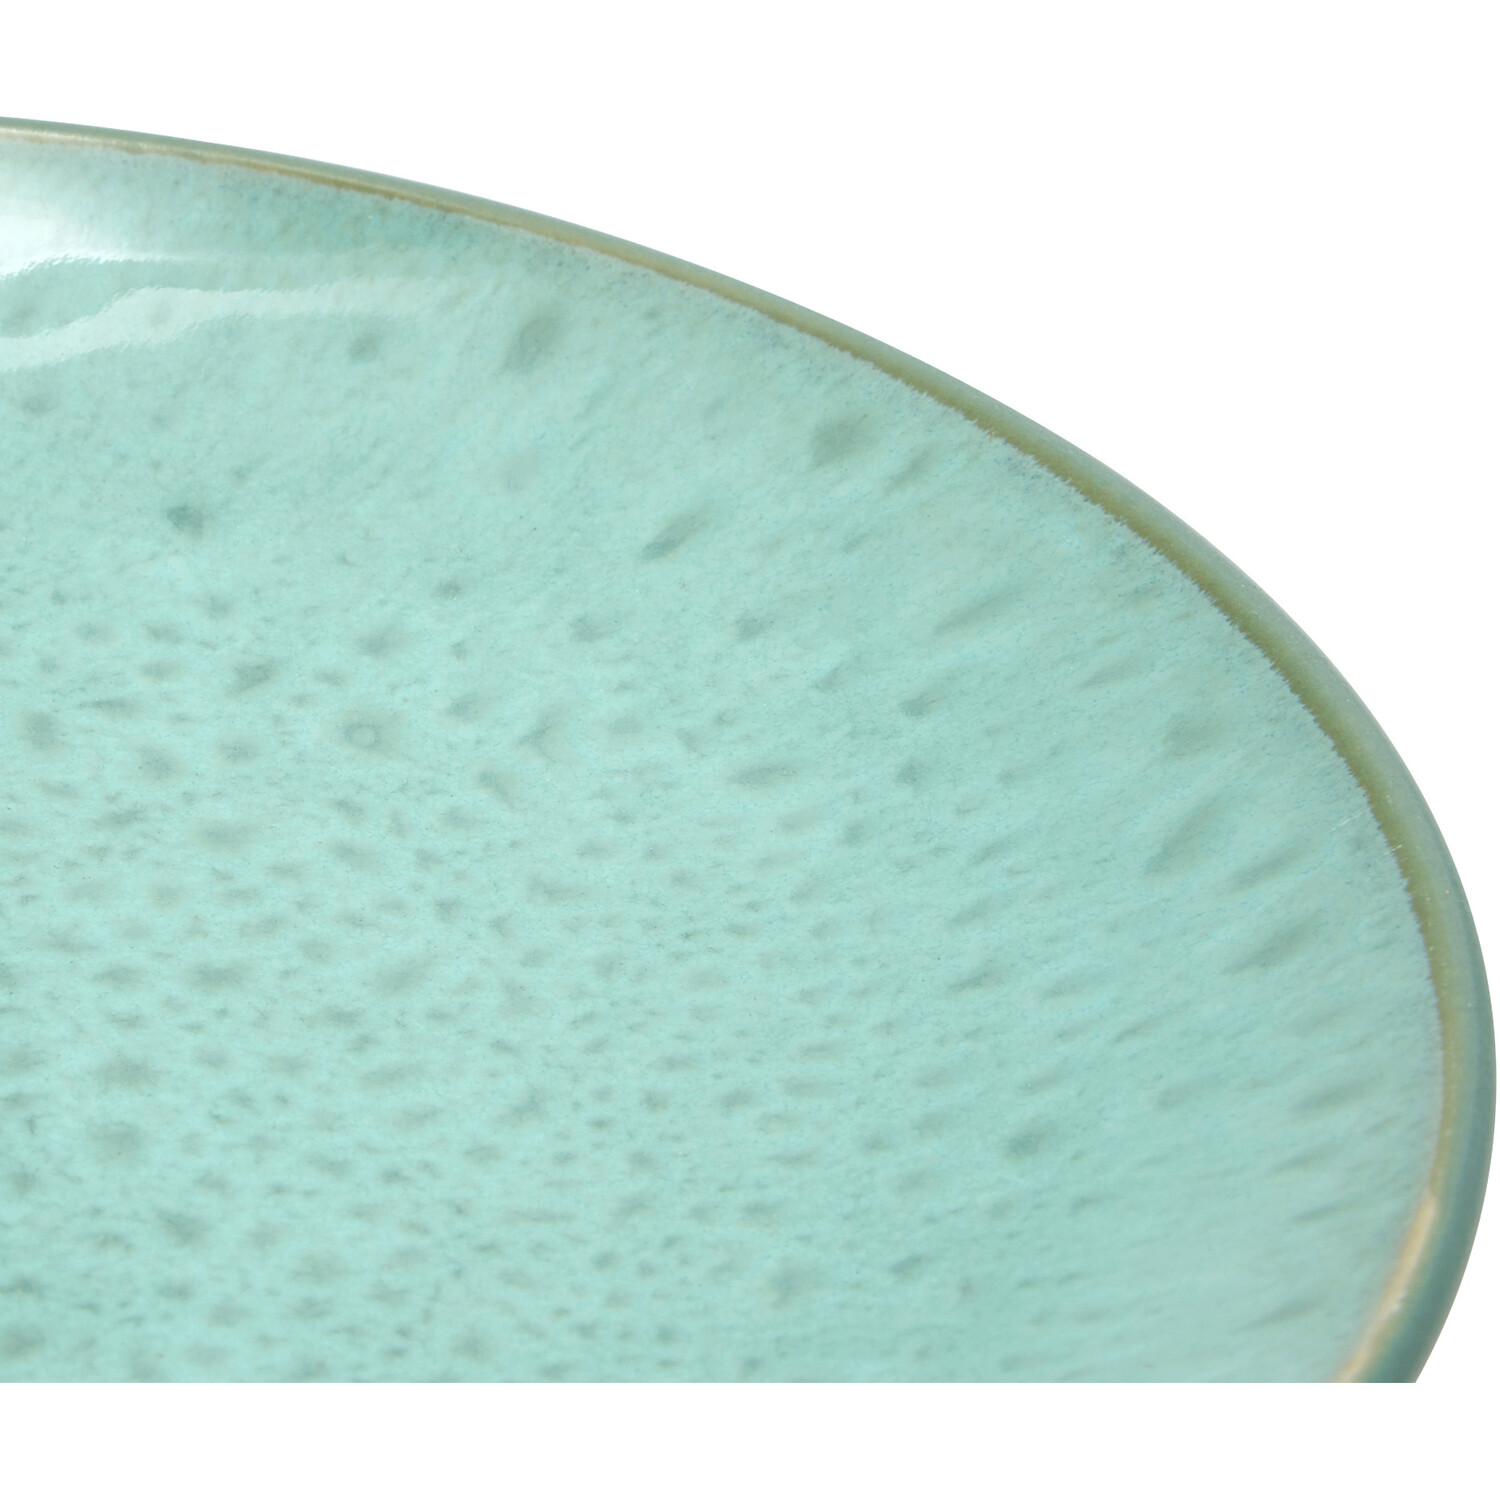 Salvie Reactive Glaze Plate - Sea Green Image 2